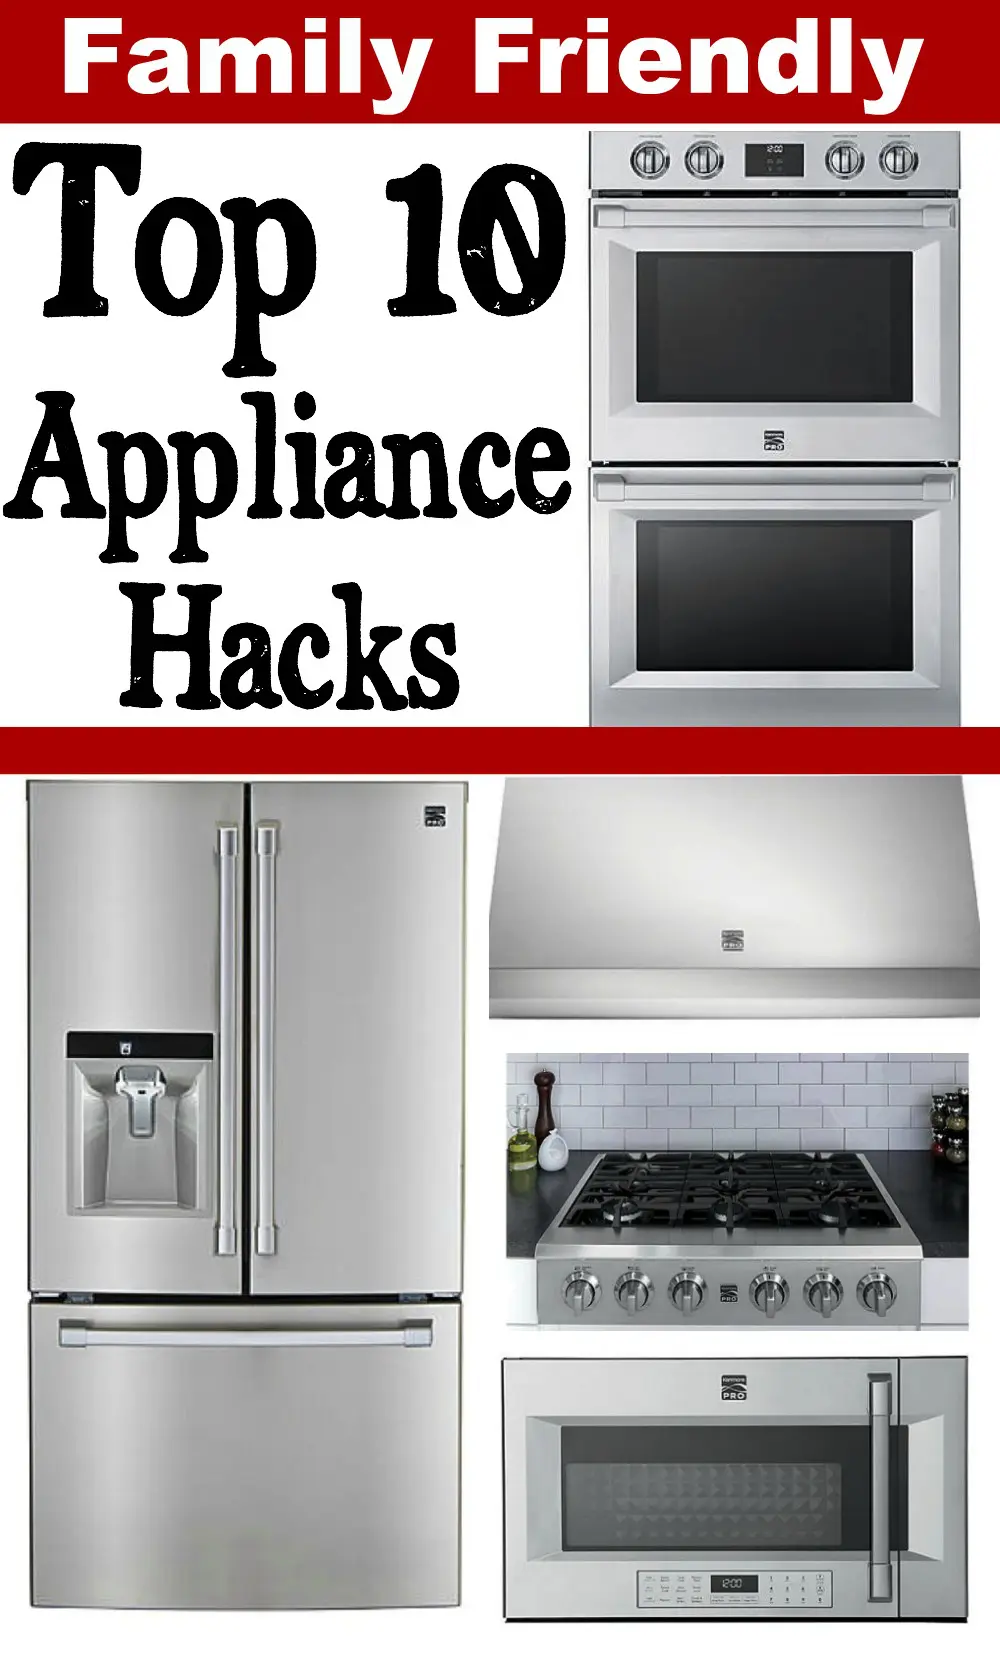 Top 10 Family Friendly Appliance Hacks